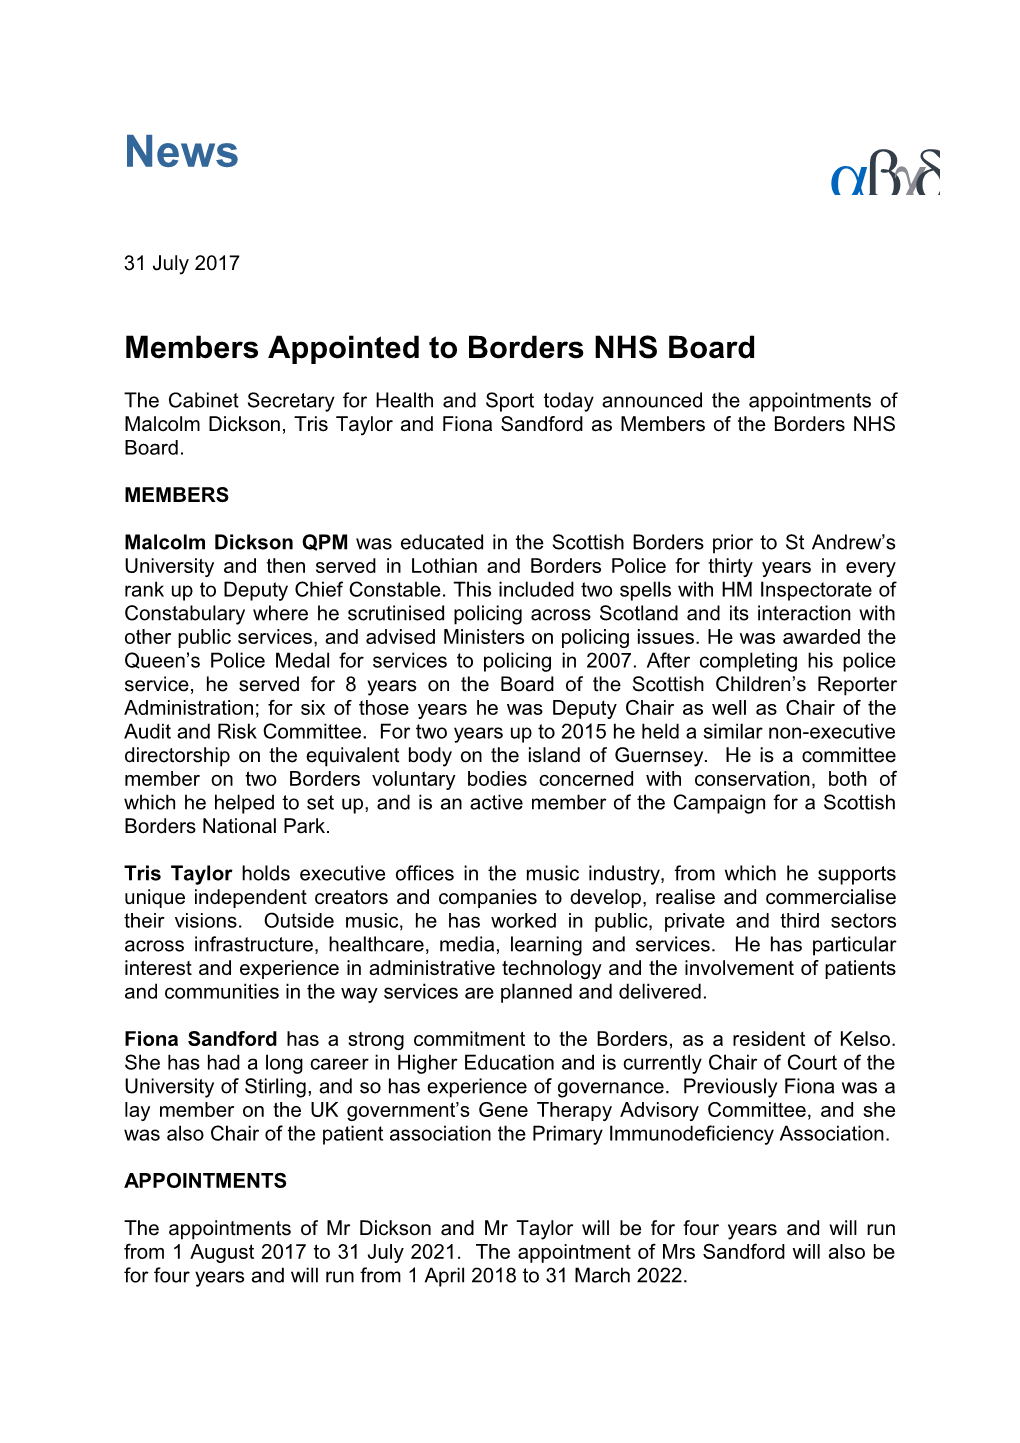 Membersappointed to Borders NHS Board